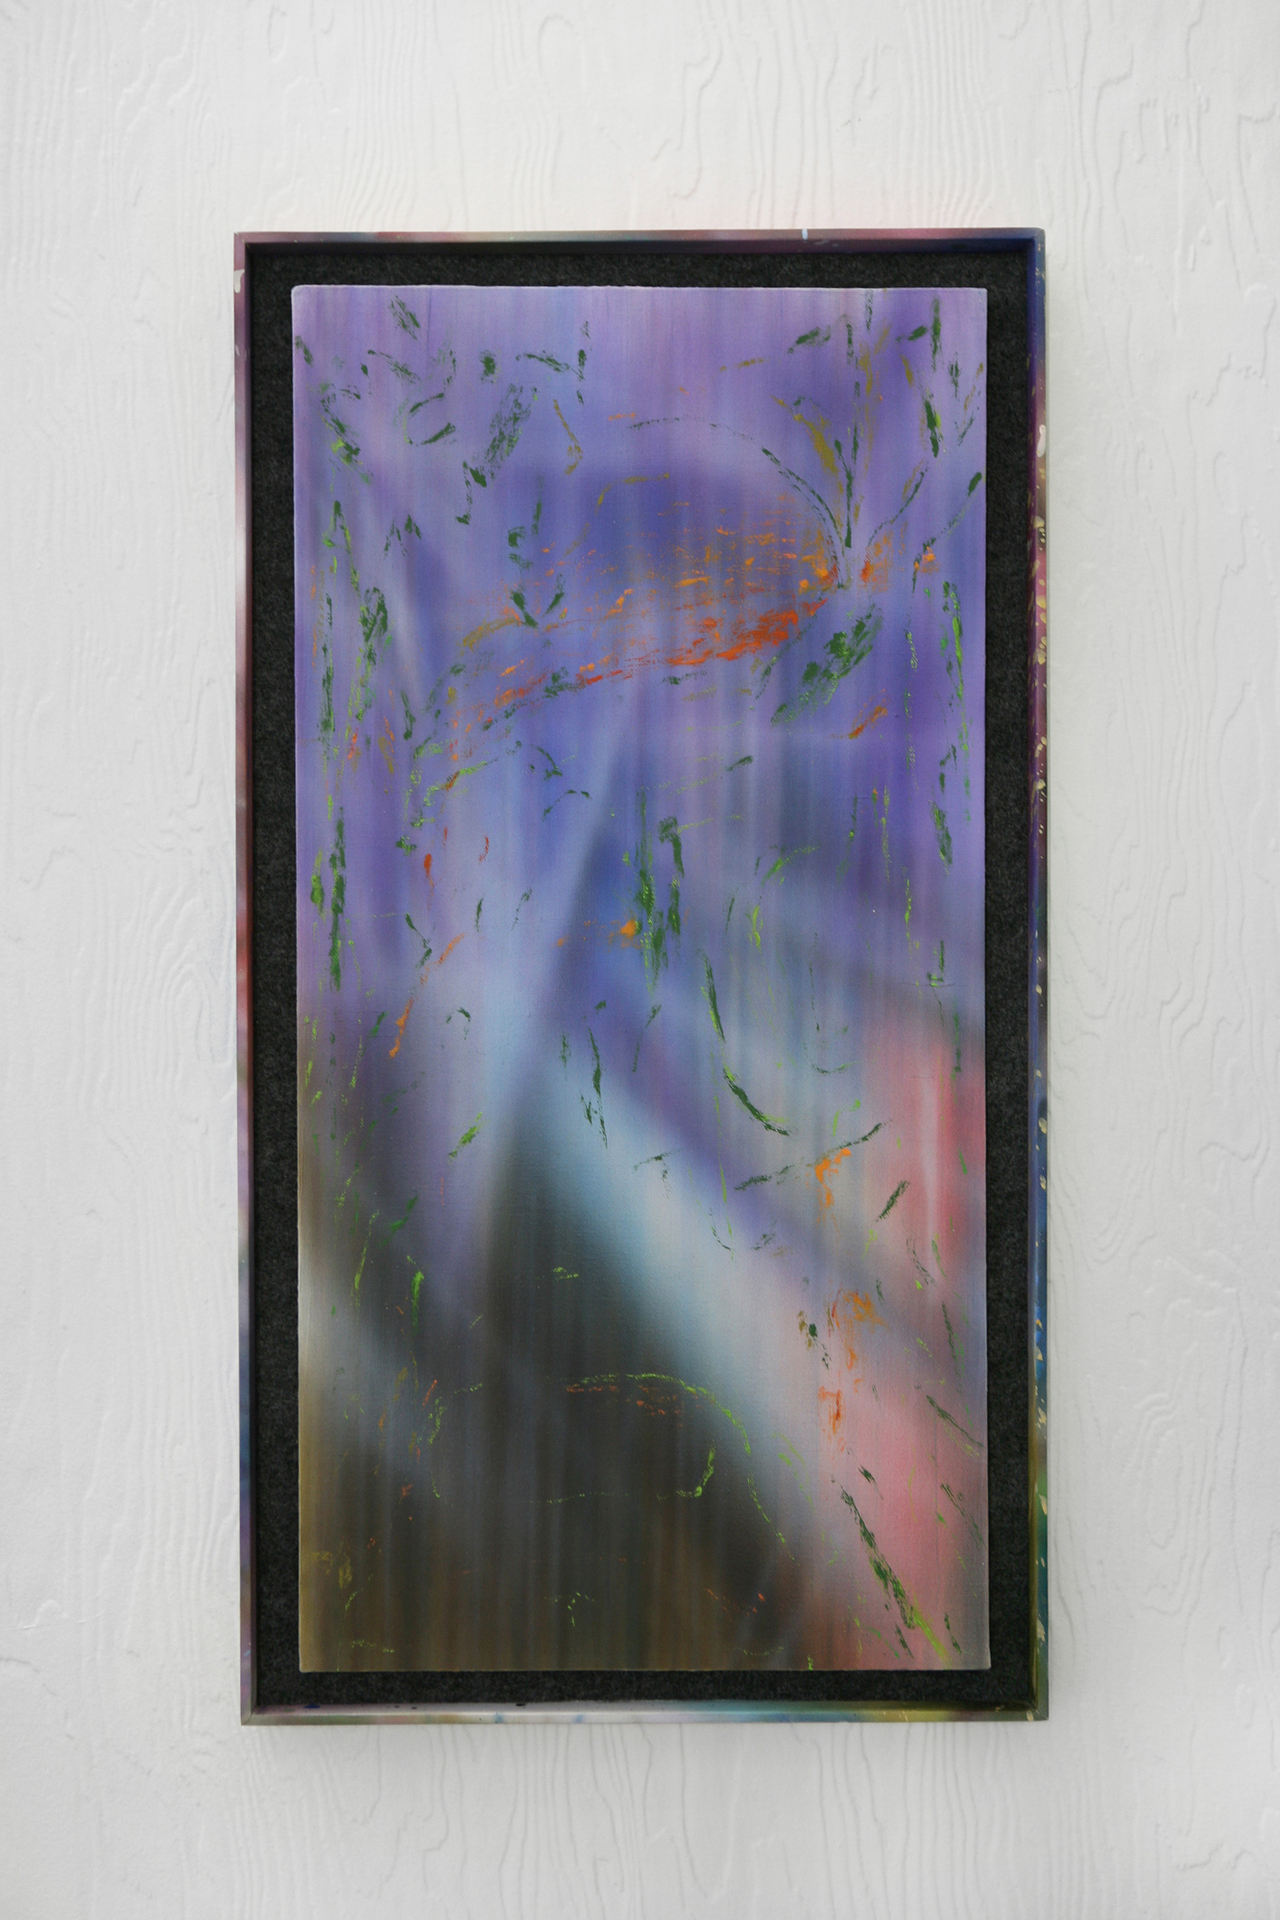 Jason Burgess, Tesla at Sunset / Echo Park, 2021, Oil and acrylic on canvas in pine, felt, and acrylic frame, 66 x 36 cm